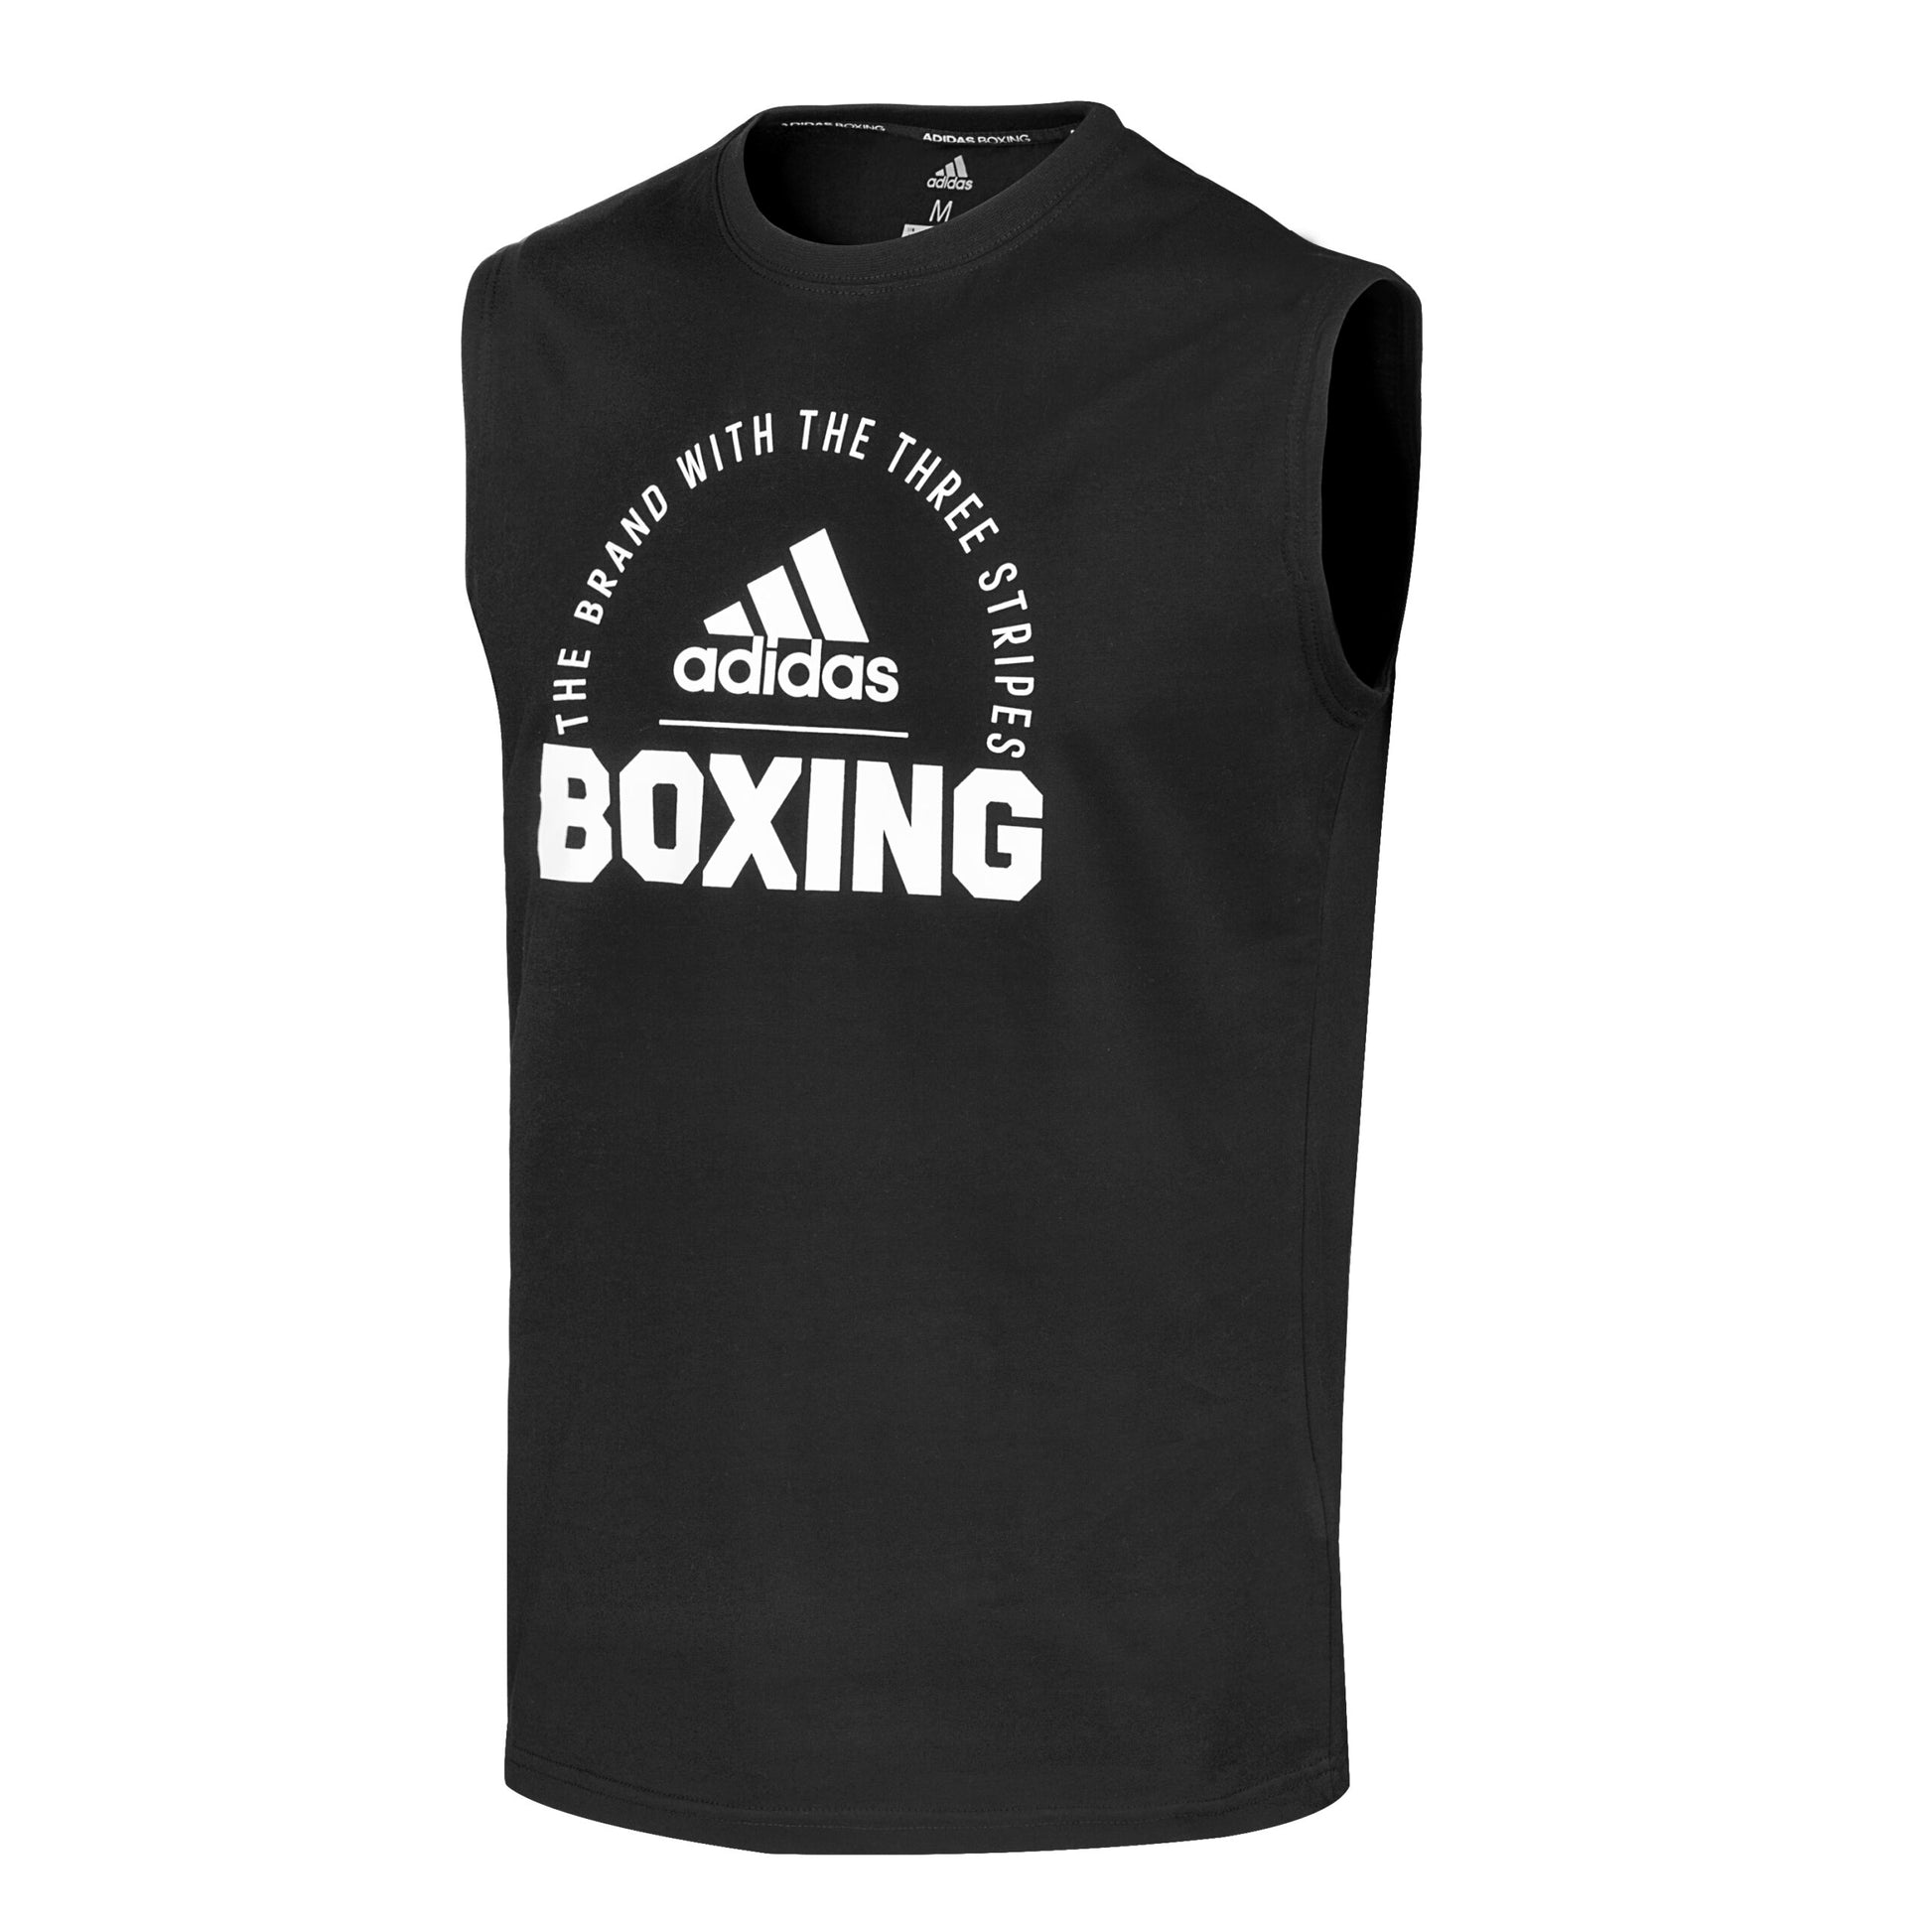 Clst21 B Adidas Boxing Sleeveless Tank Top Black 03